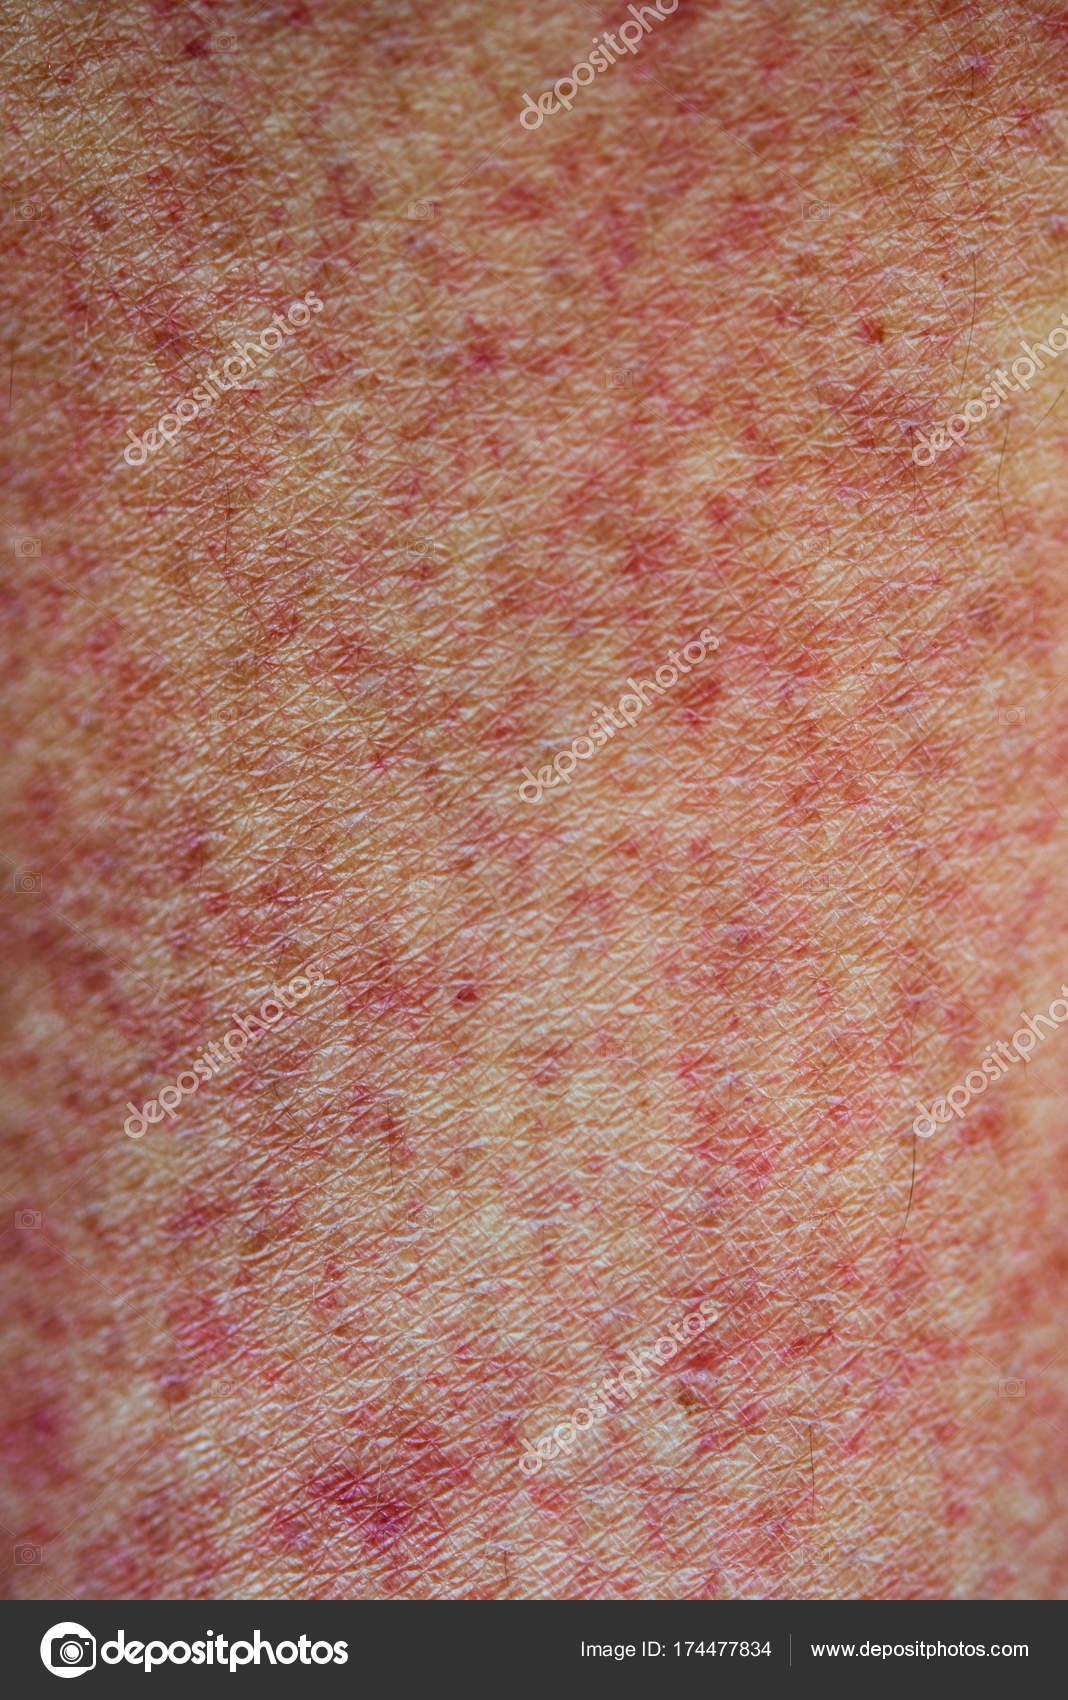 Skin With Red Rashes — Stock Photo © Szefei 174477834